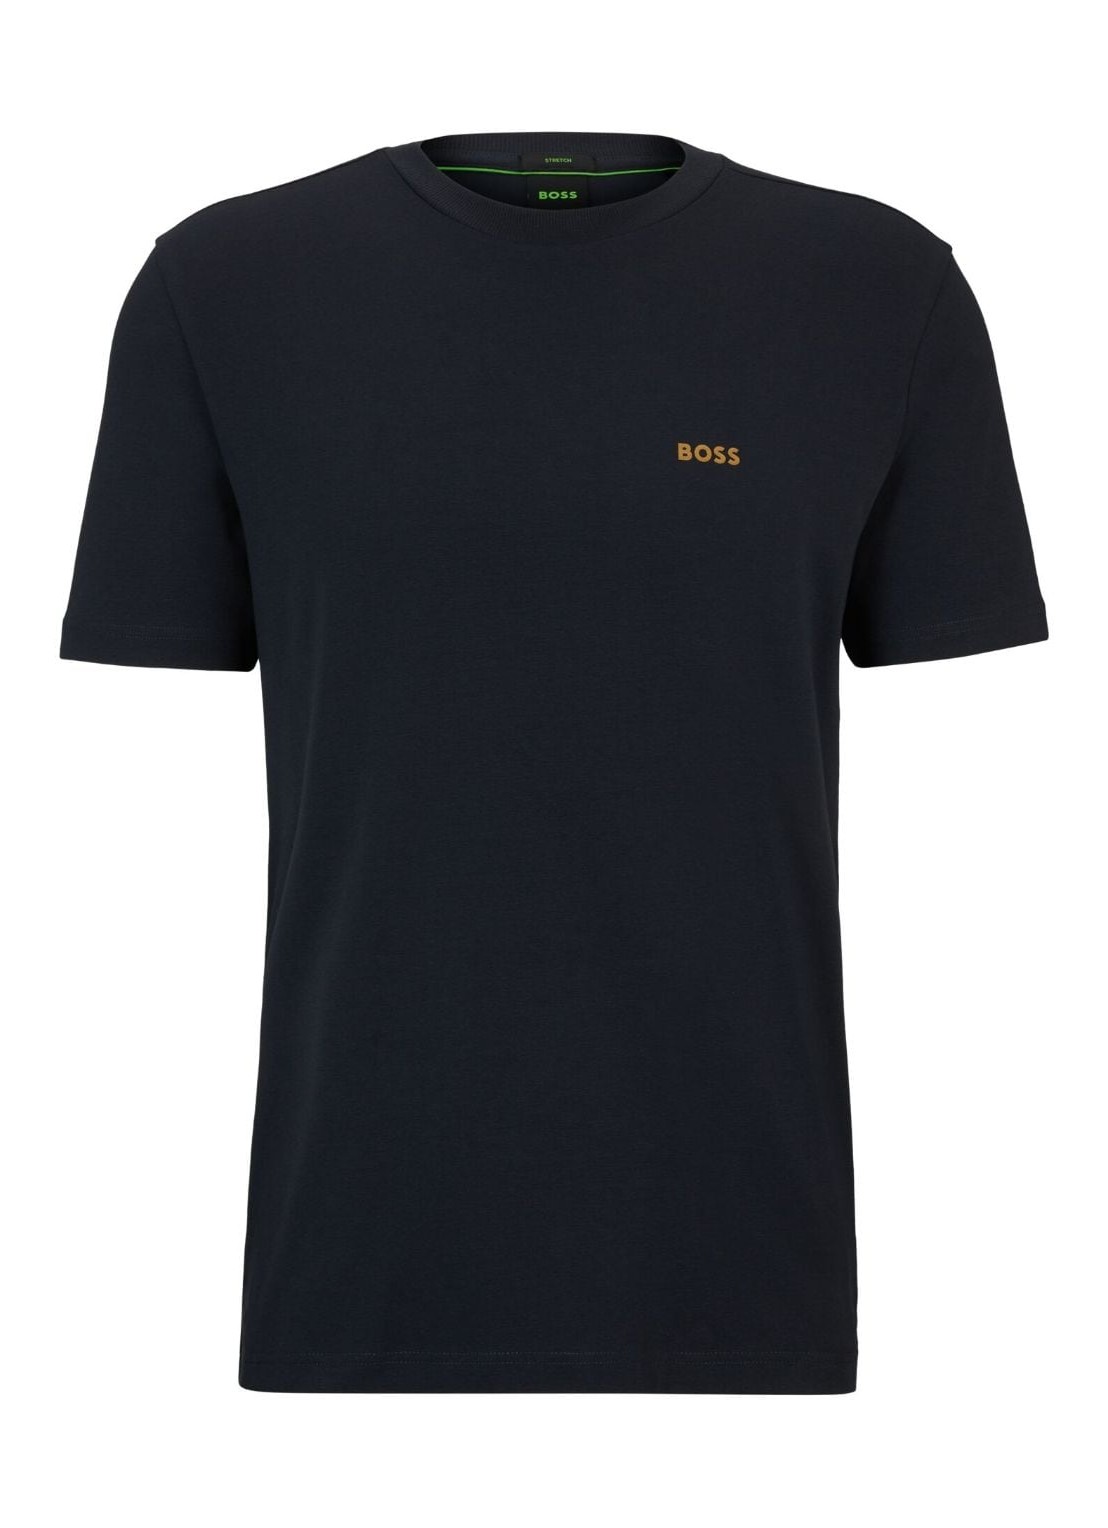 Camiseta boss t-shirt mantee - 50506373 401 talla XXL
 